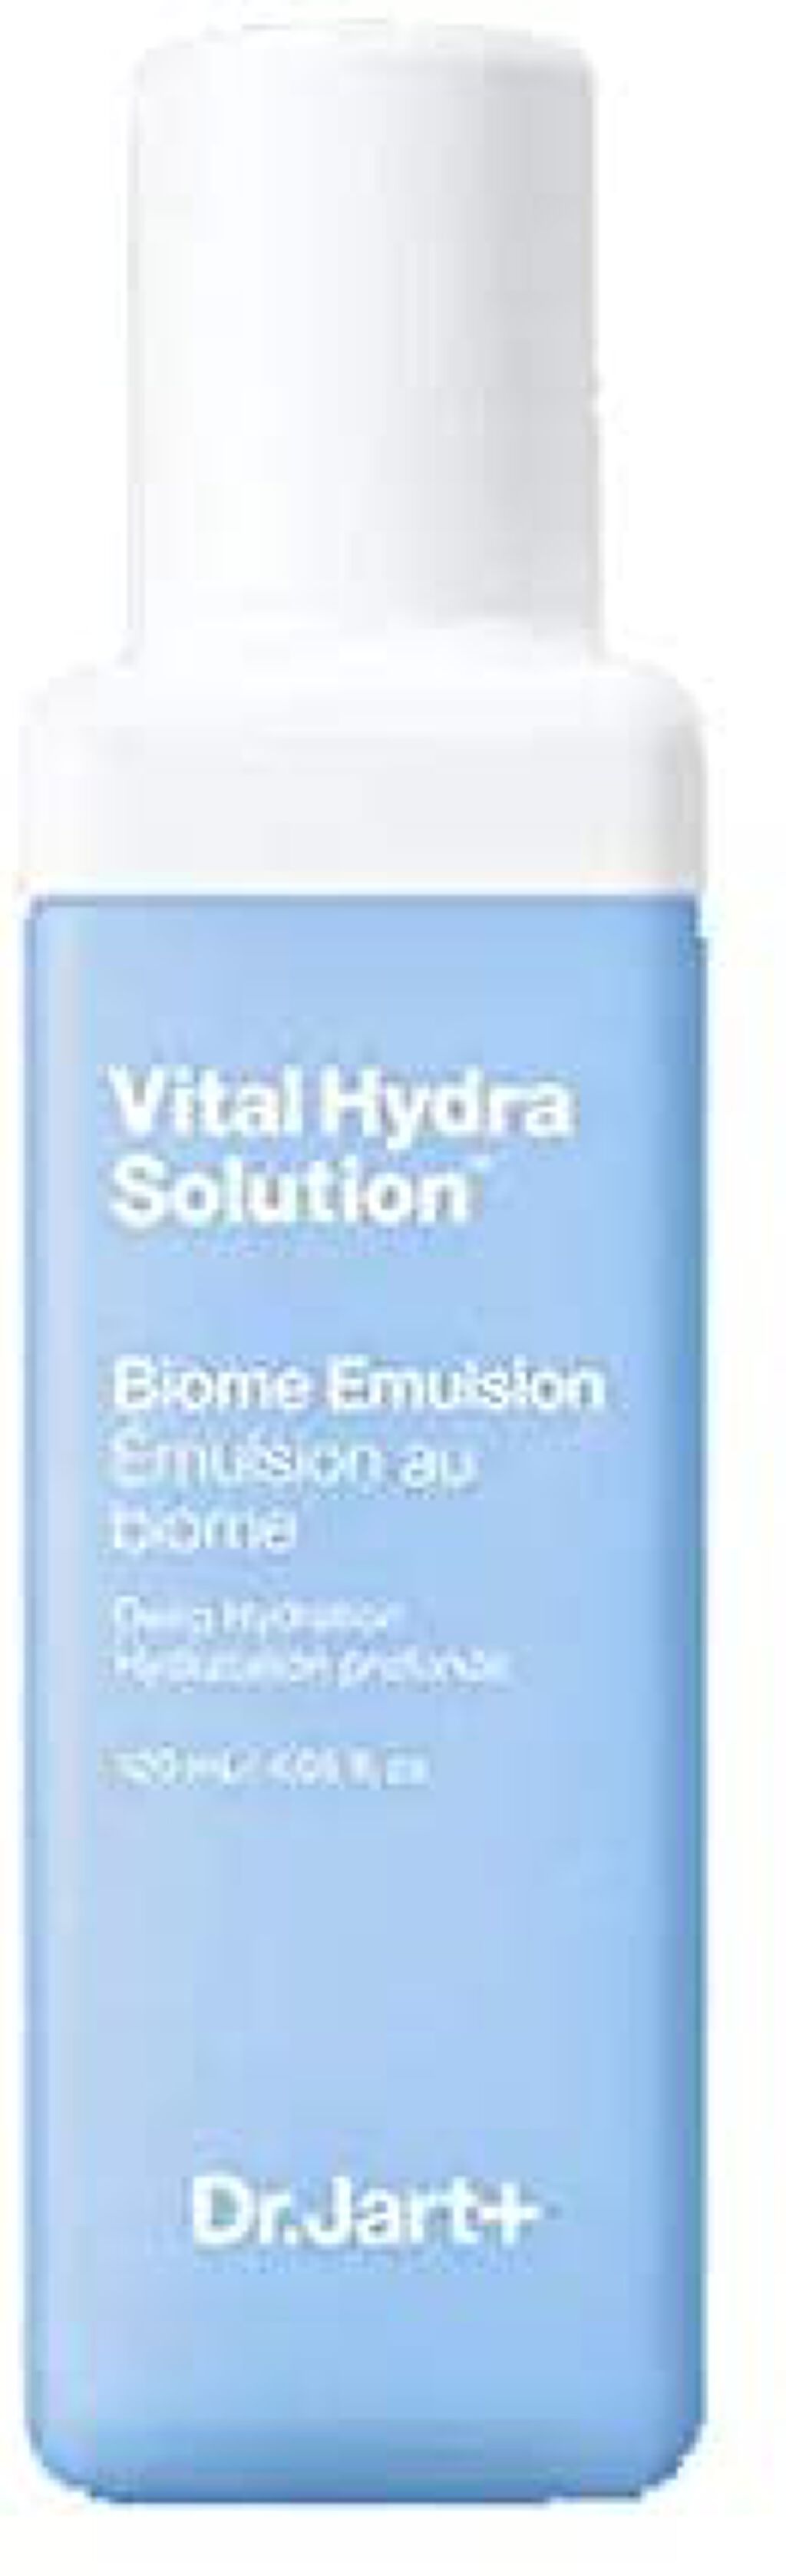 vital hydra solution biome emulsion dr jart